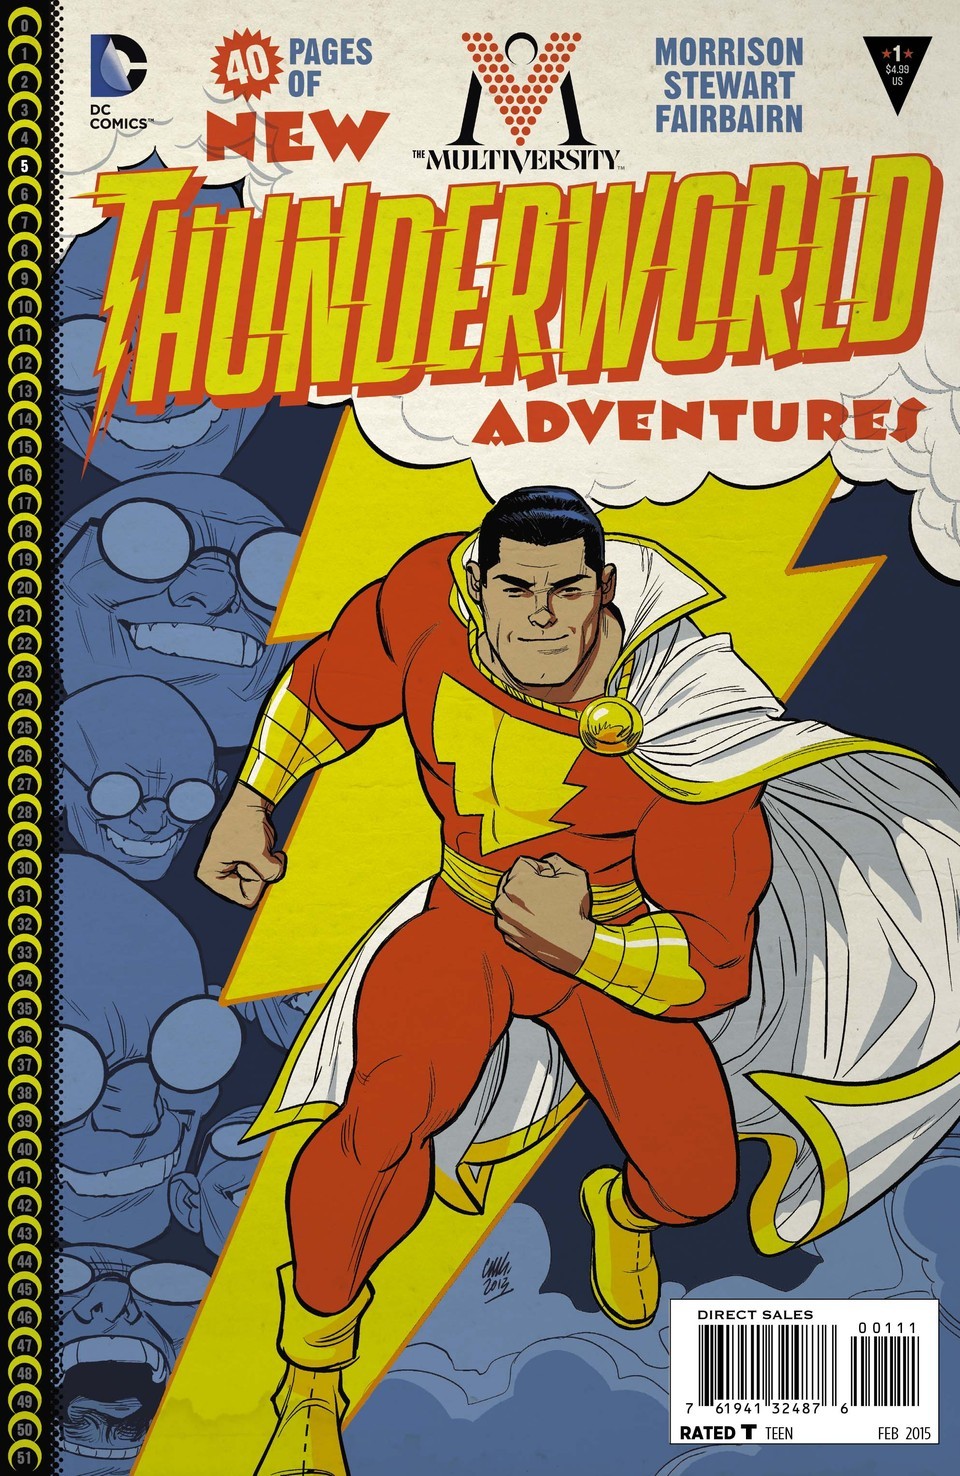 The Multiversity: Thunderworld Adventures Vol. 1 #1